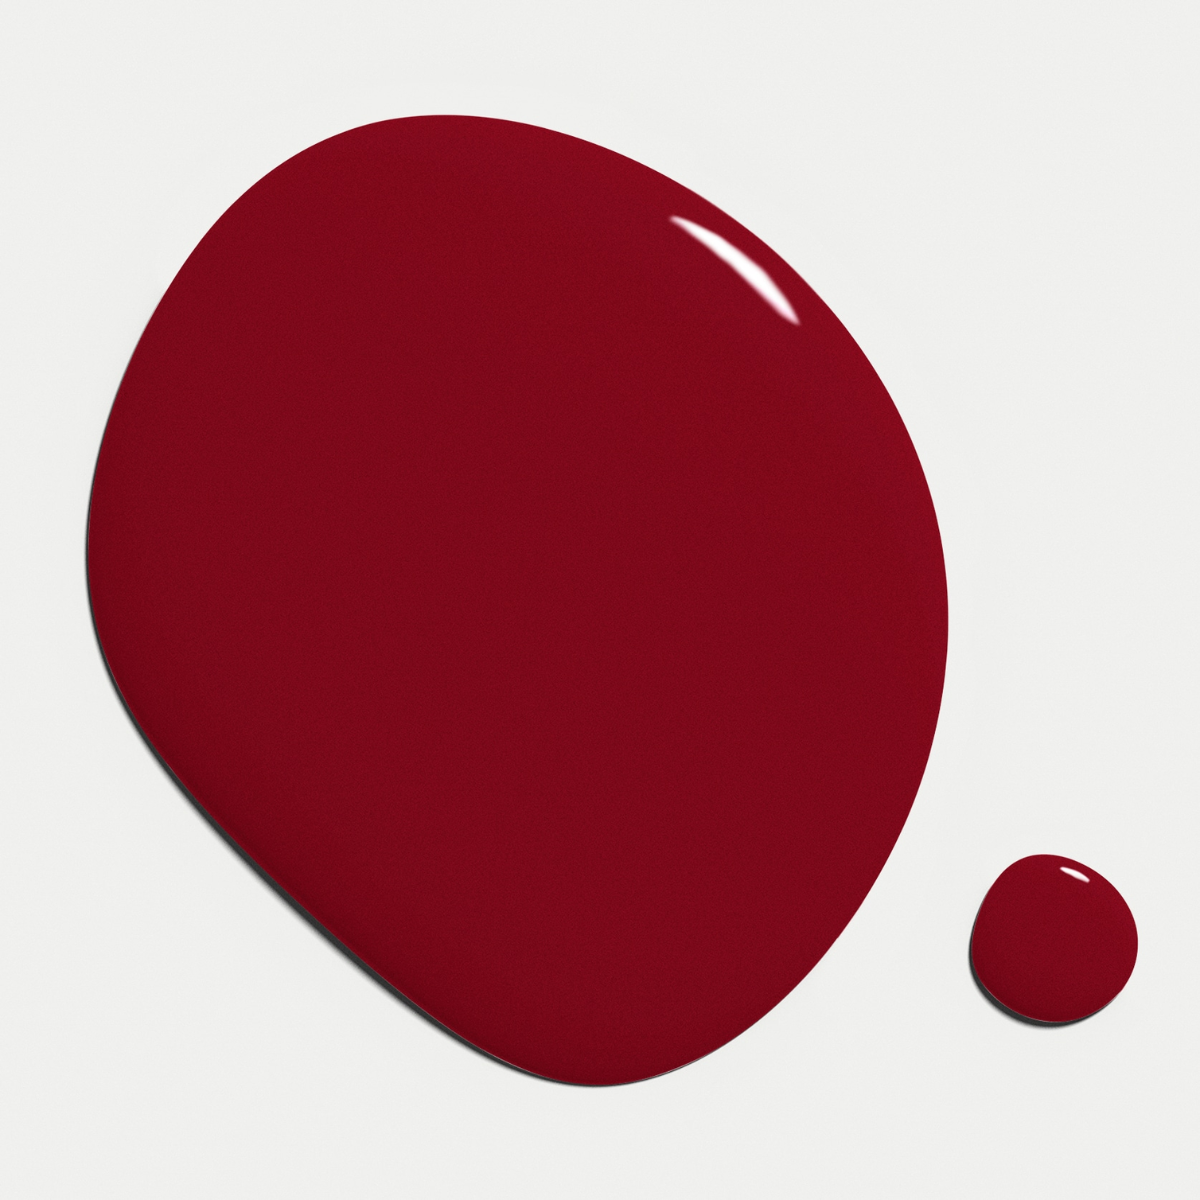 Nilens Jord - Nail Polish – Ruby Red